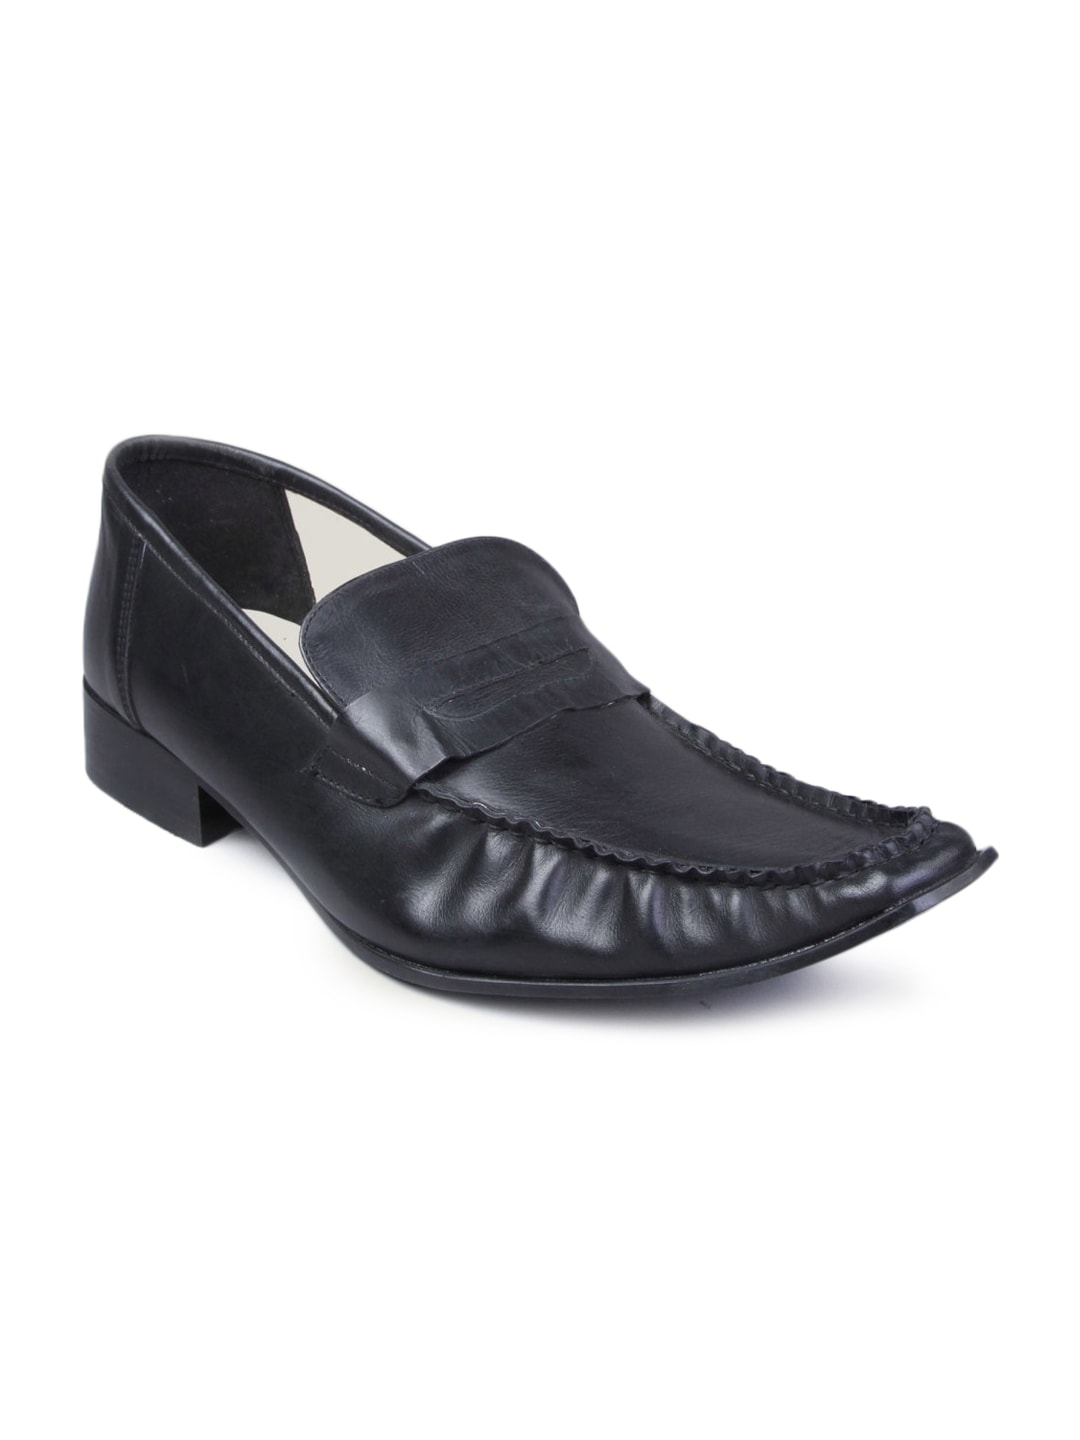 Carlton London Men Semi Formal Black Shoe